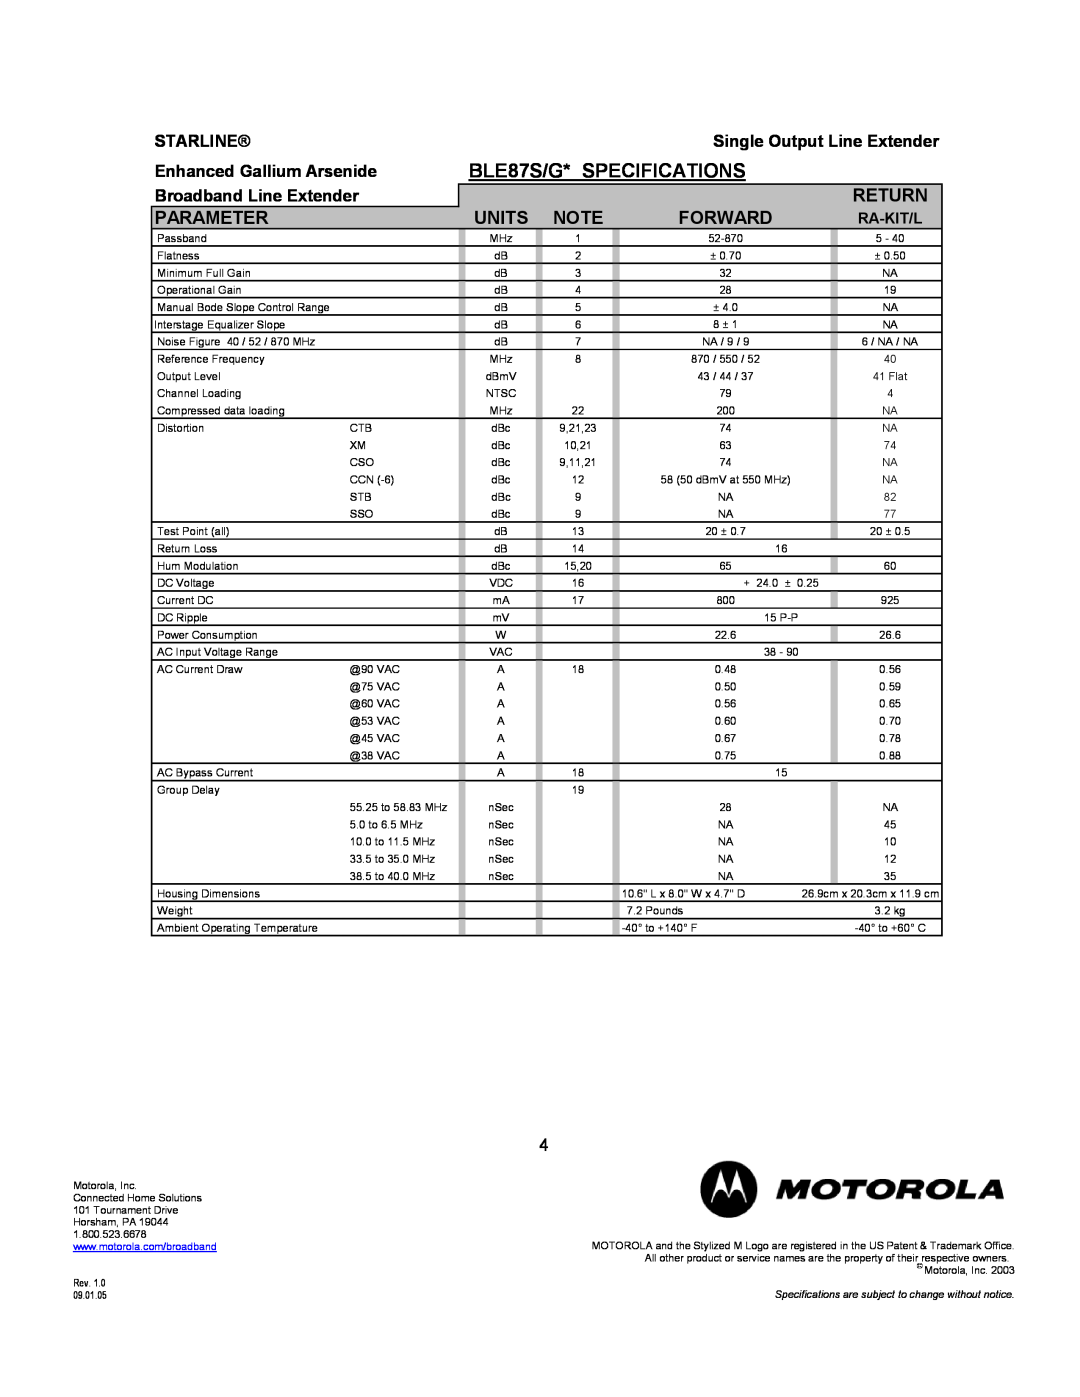 Motorola BLE87S/G* SPECIFICATIONS, Parameter, Starline, Single Output Line Extender, Enhanced Gallium Arsenide, Units 